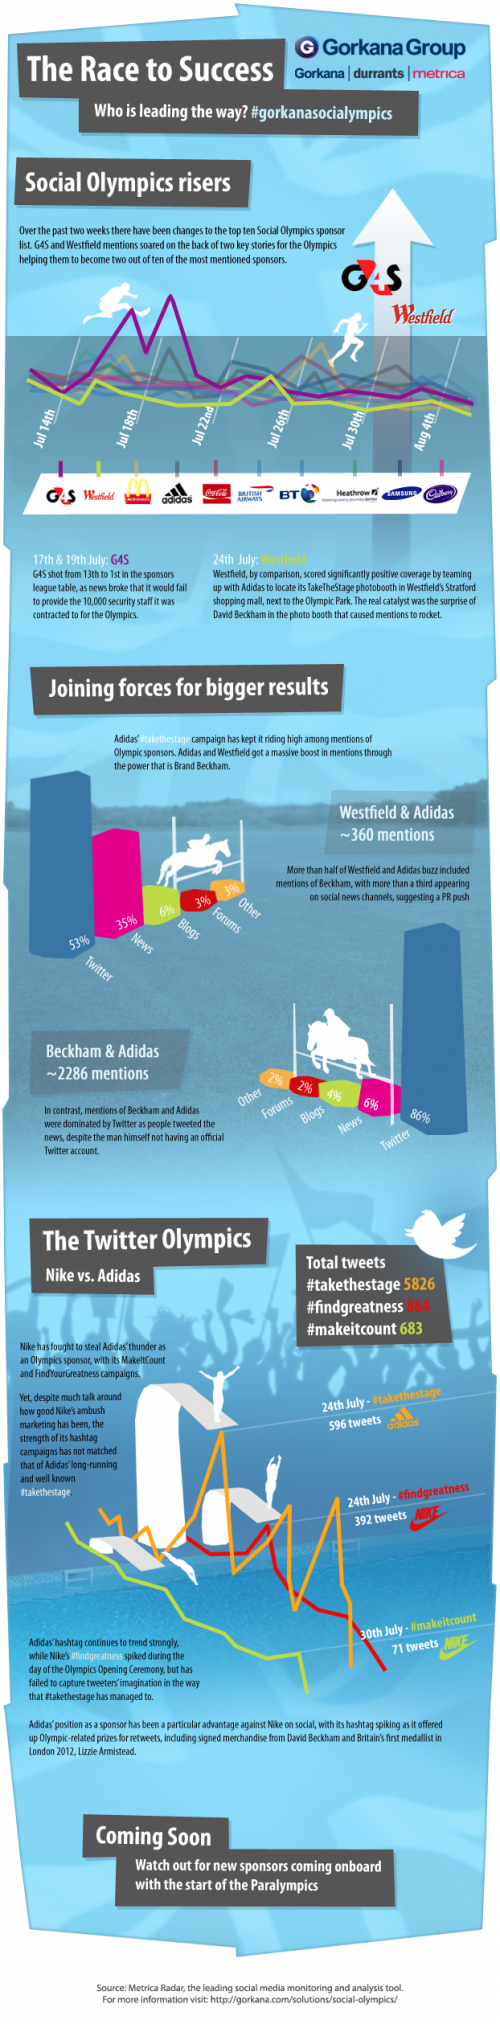 Twitter Olympiade